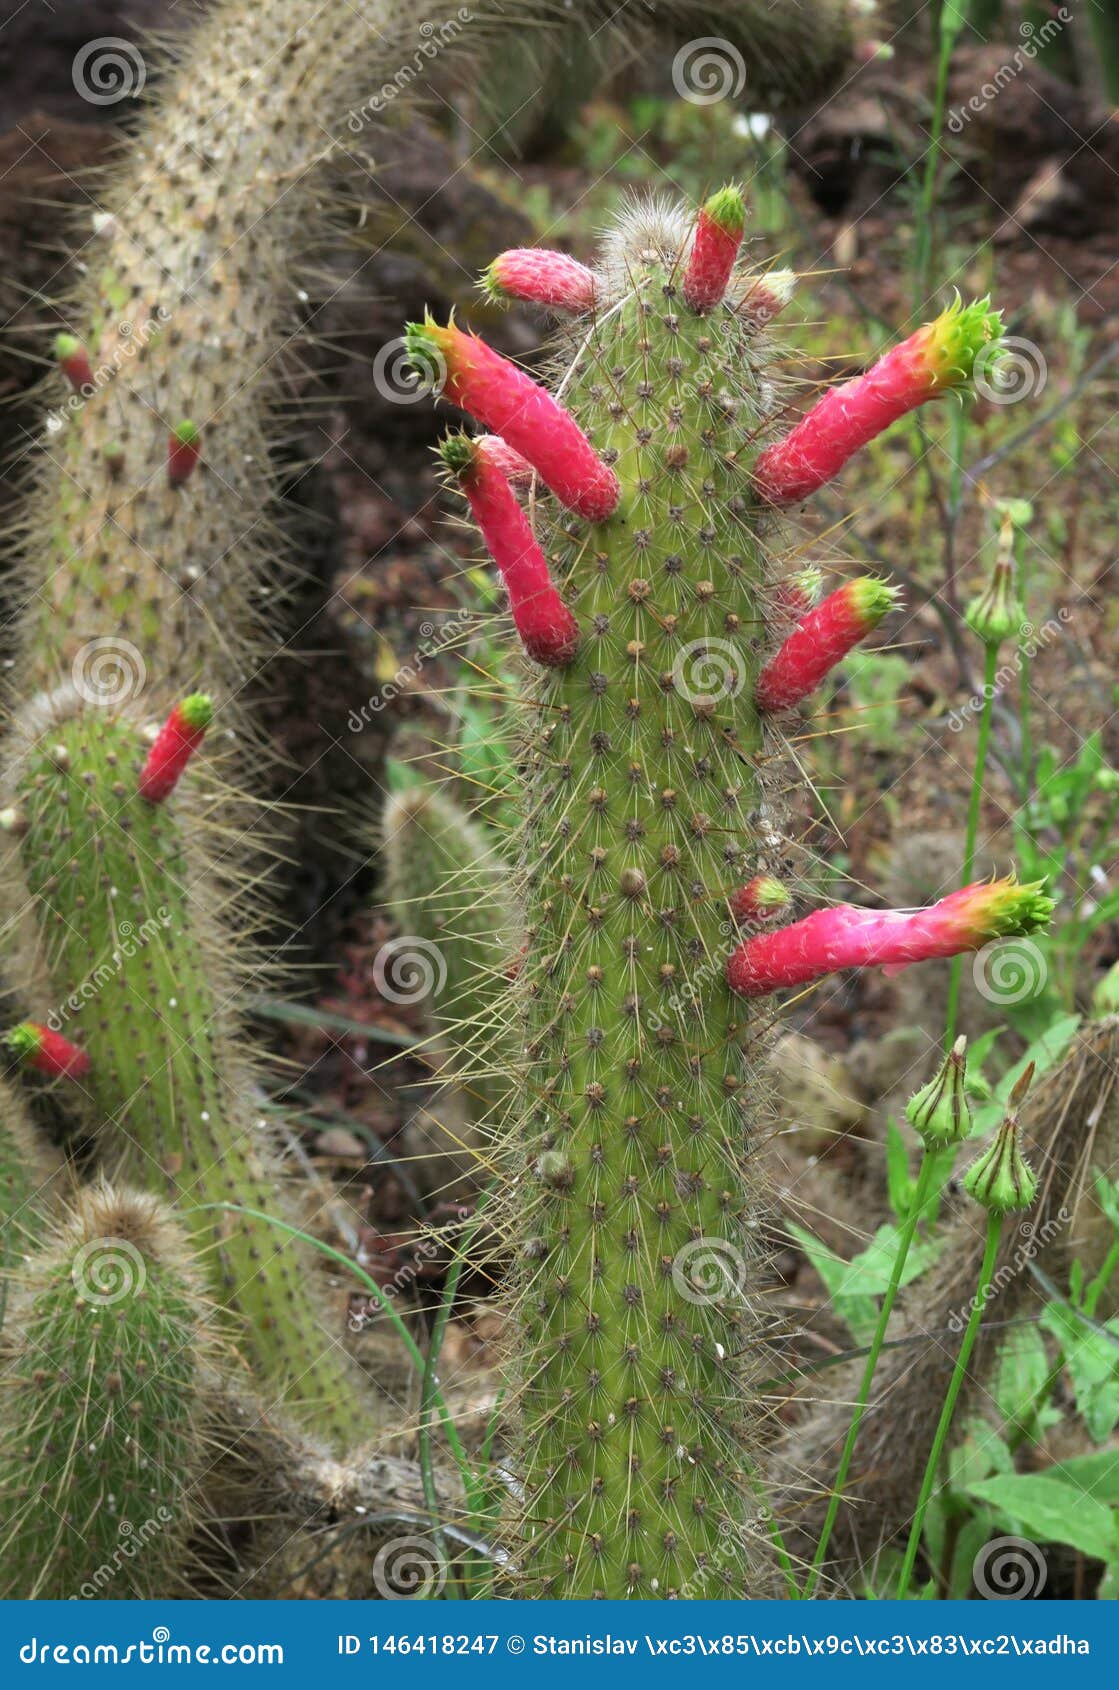 cactus in the botanical garden of jardÃÂ­n botÃÂ¡nico viera y clavijo in island of gran canaria